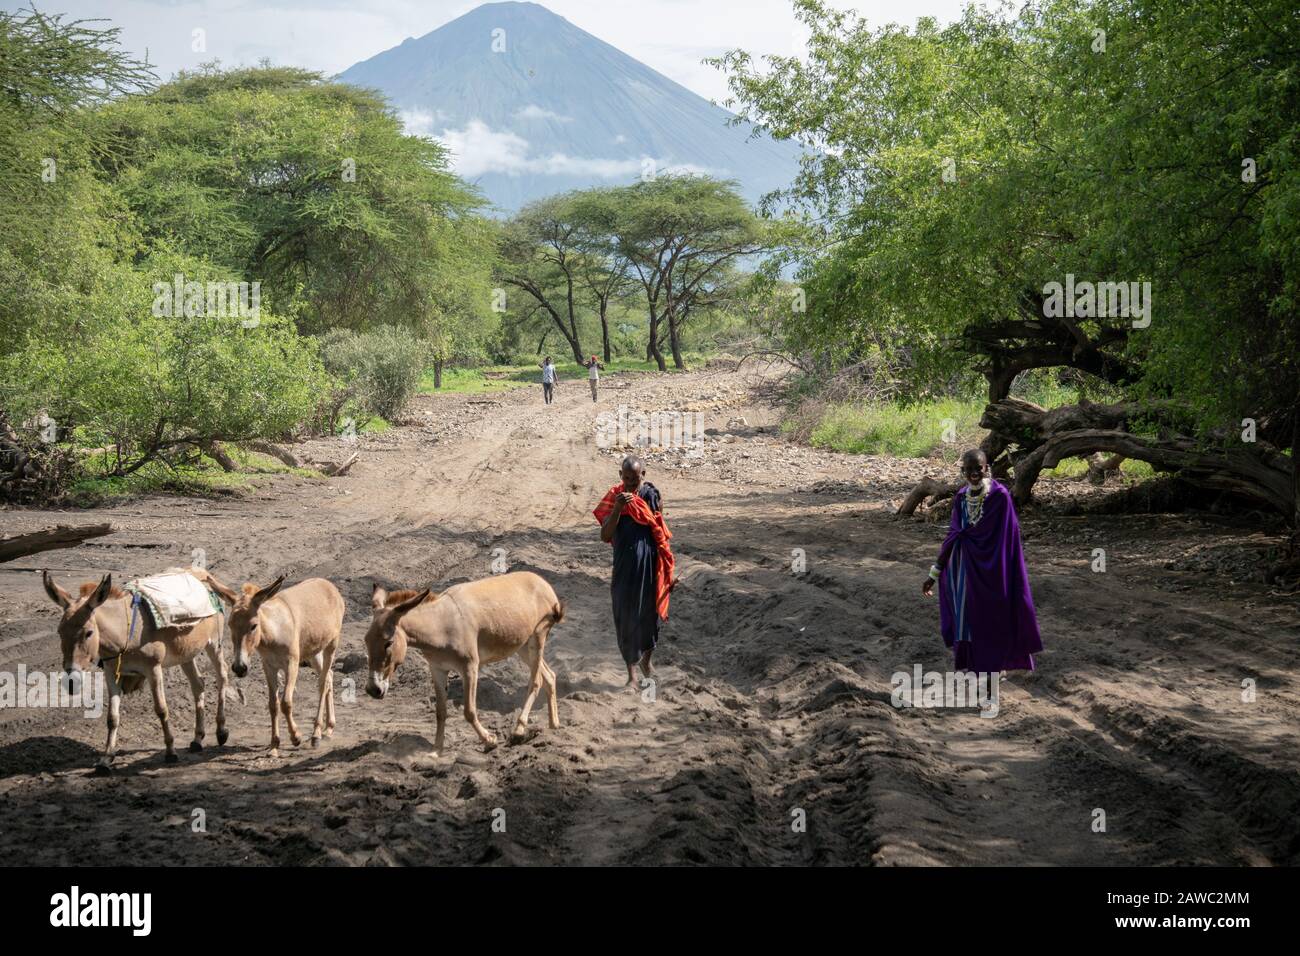 TANZANIA, NATRON LAKE - JANUARY 2020: Maasai shepherd people in traditional cloth walking near Lake Natron and Ol Doinyo Lengai volcano, Tanzania Stock Photo